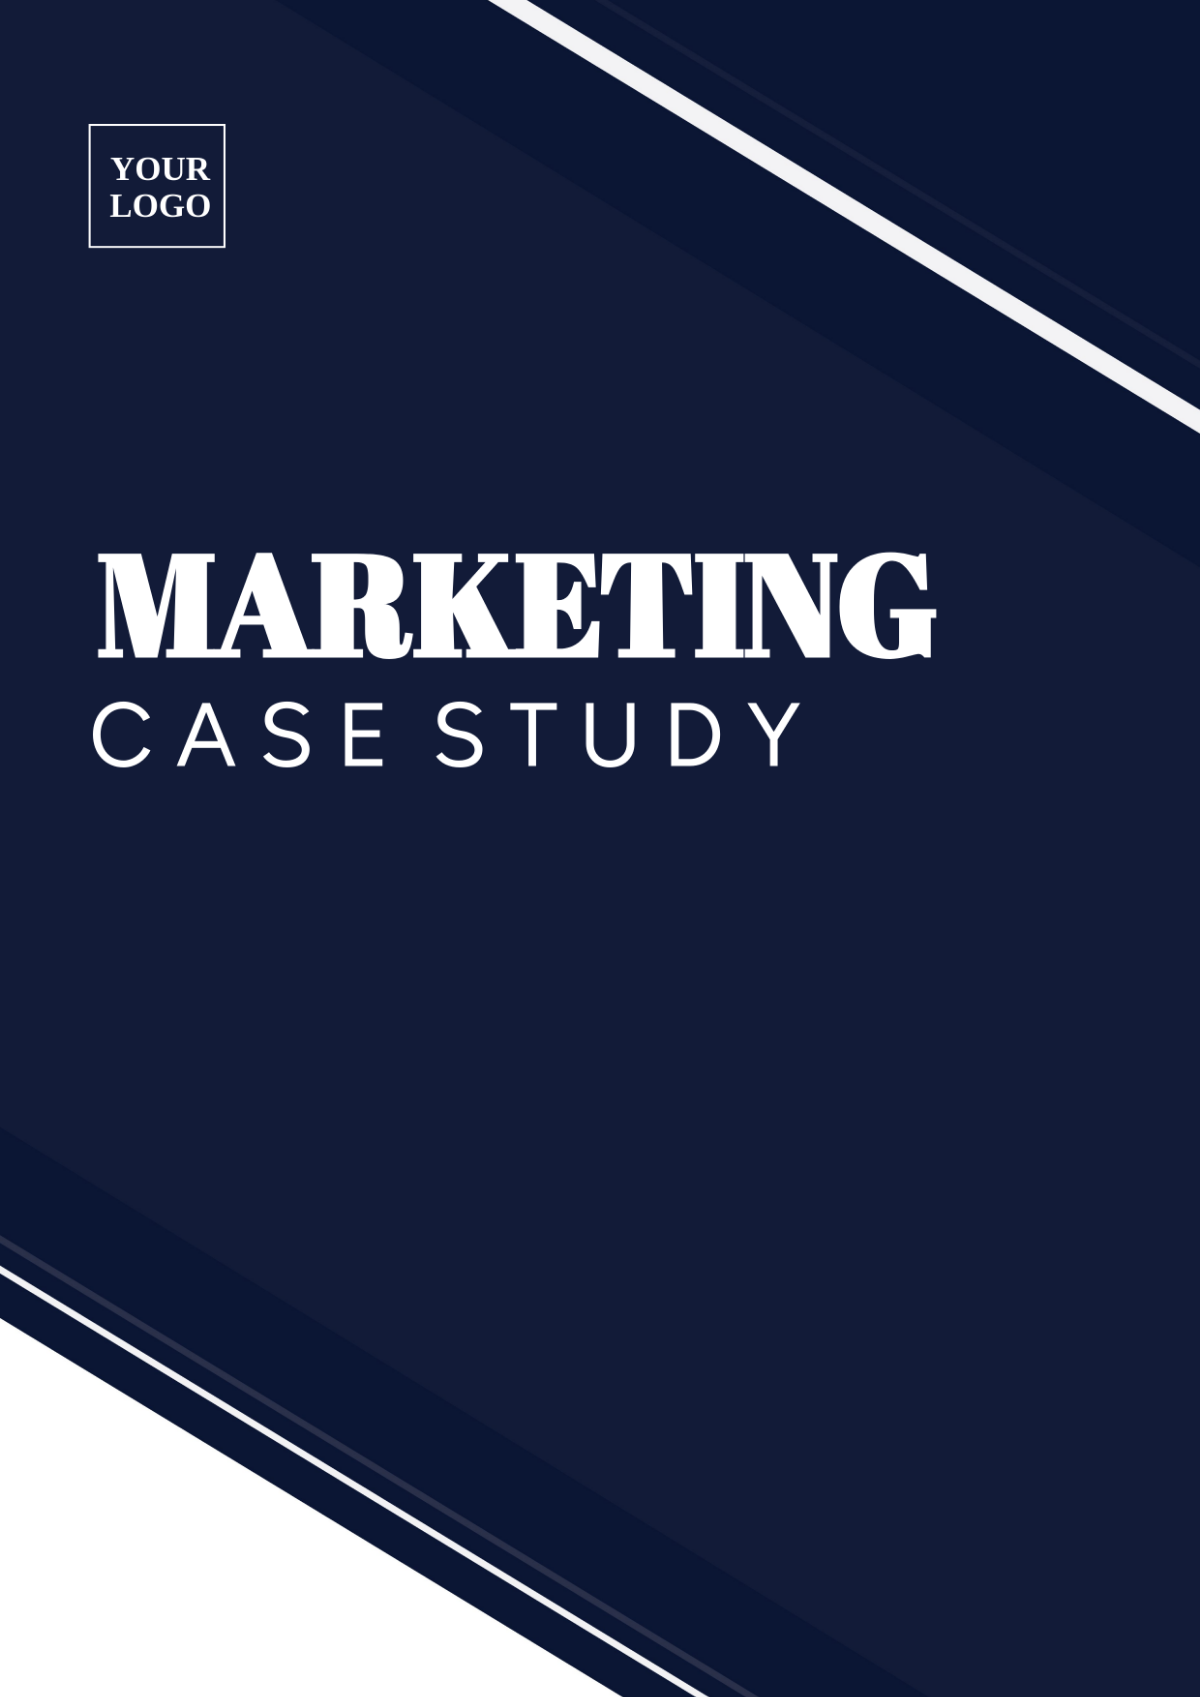 Marketing Case Study Template